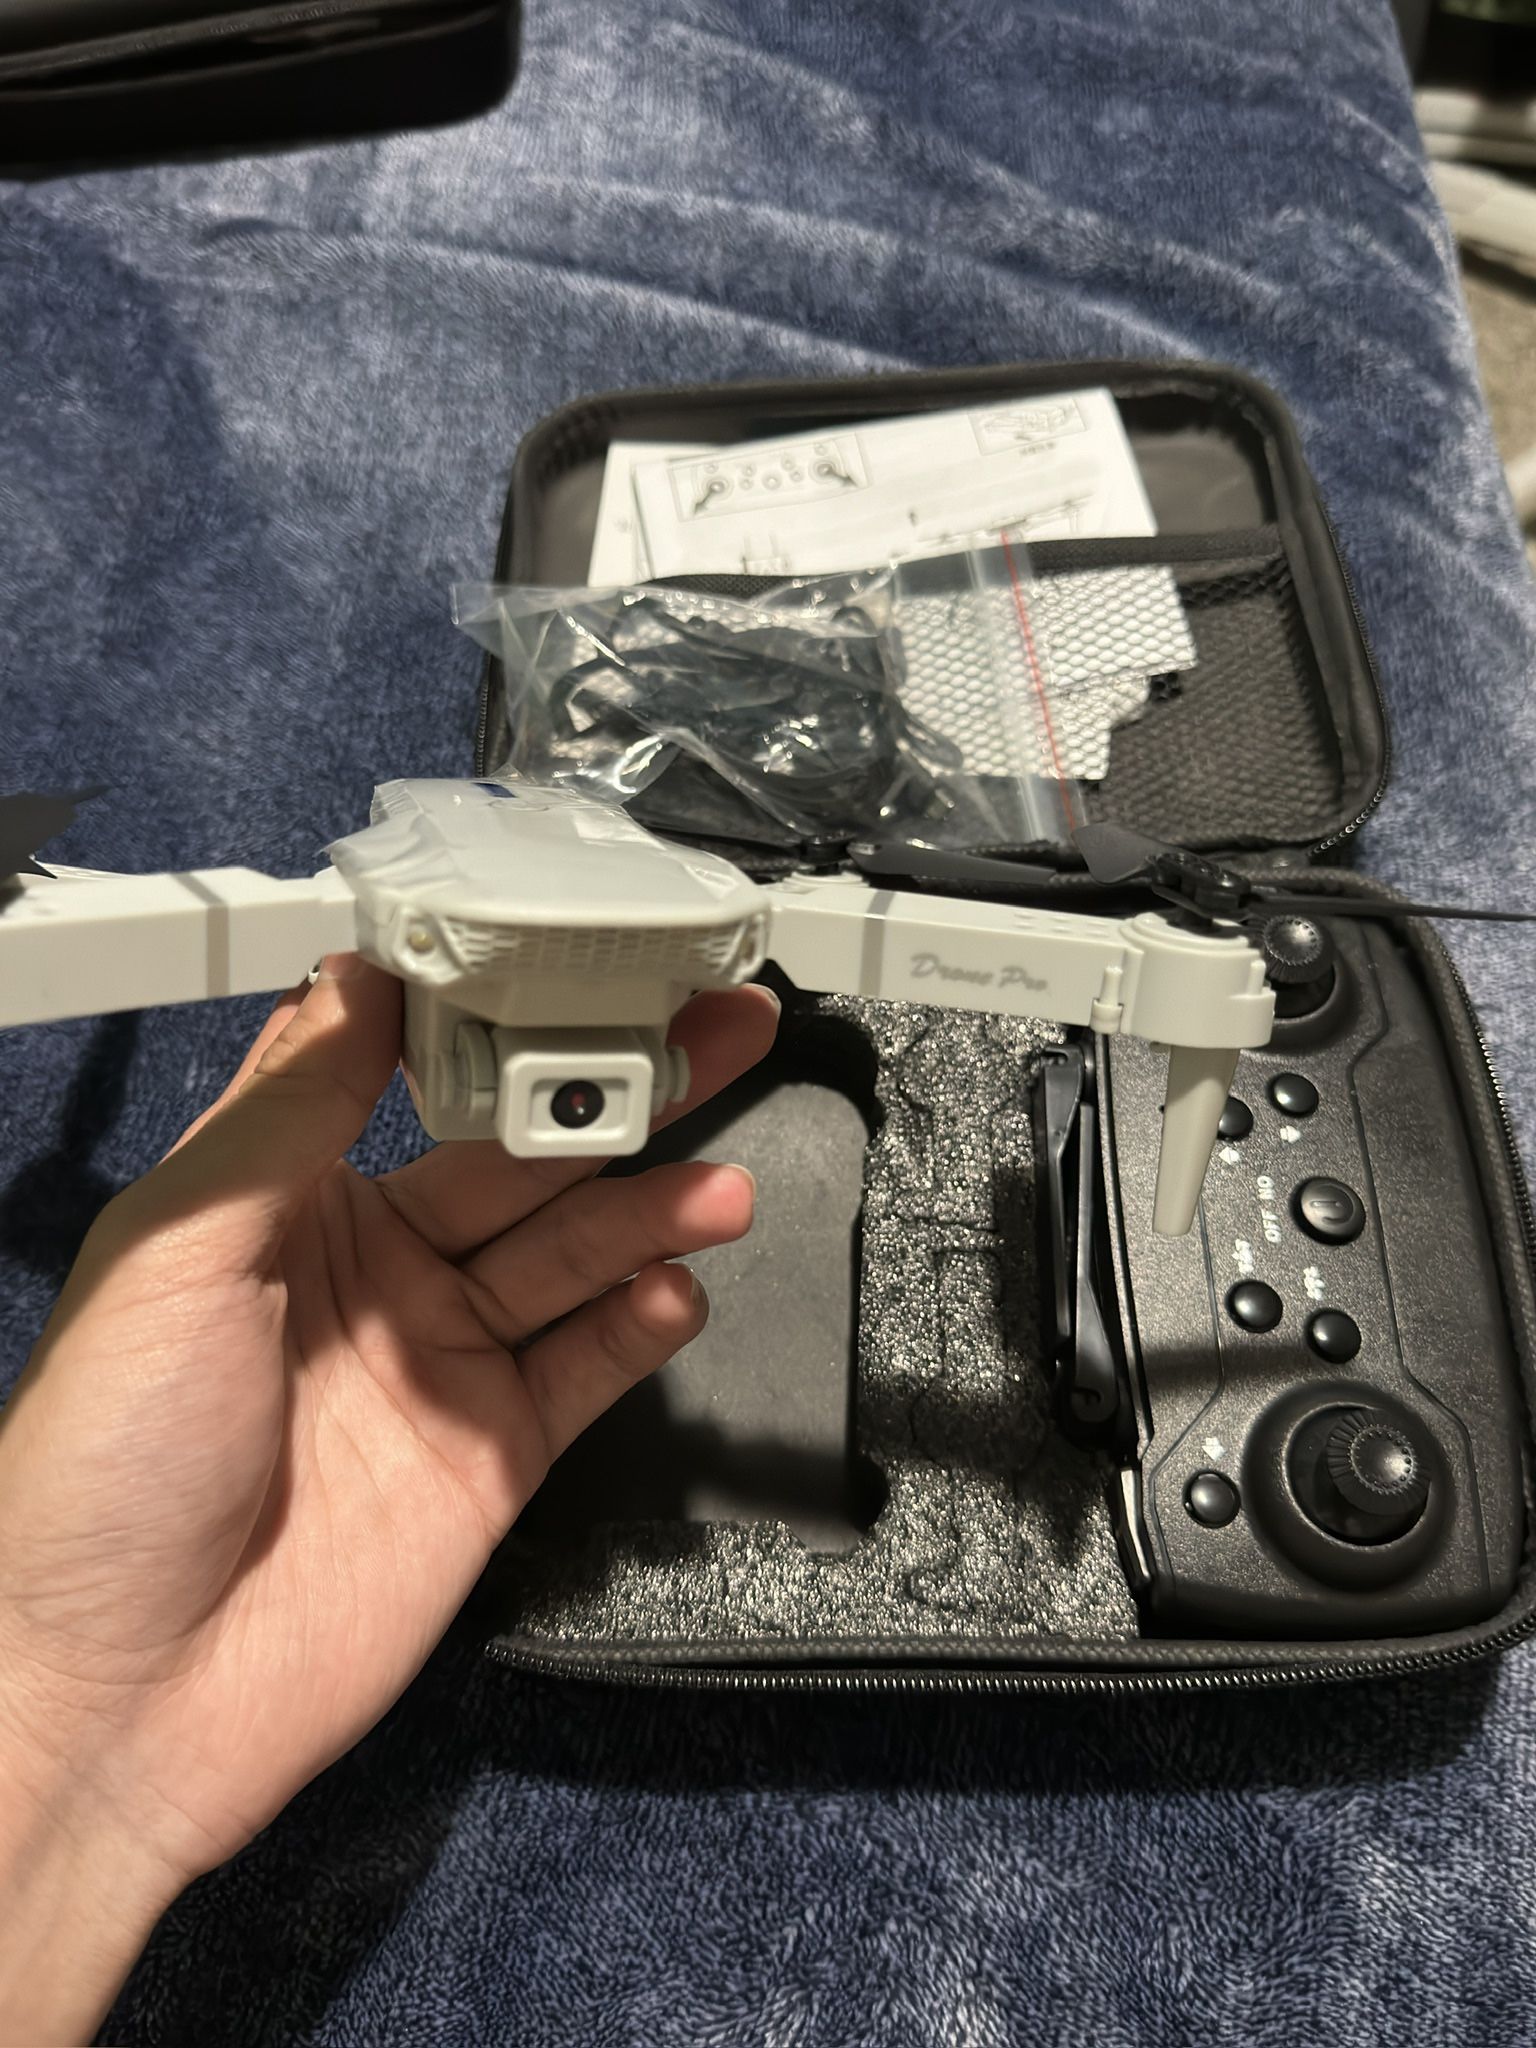 drone with two cameras *READ DESCRIPTION*